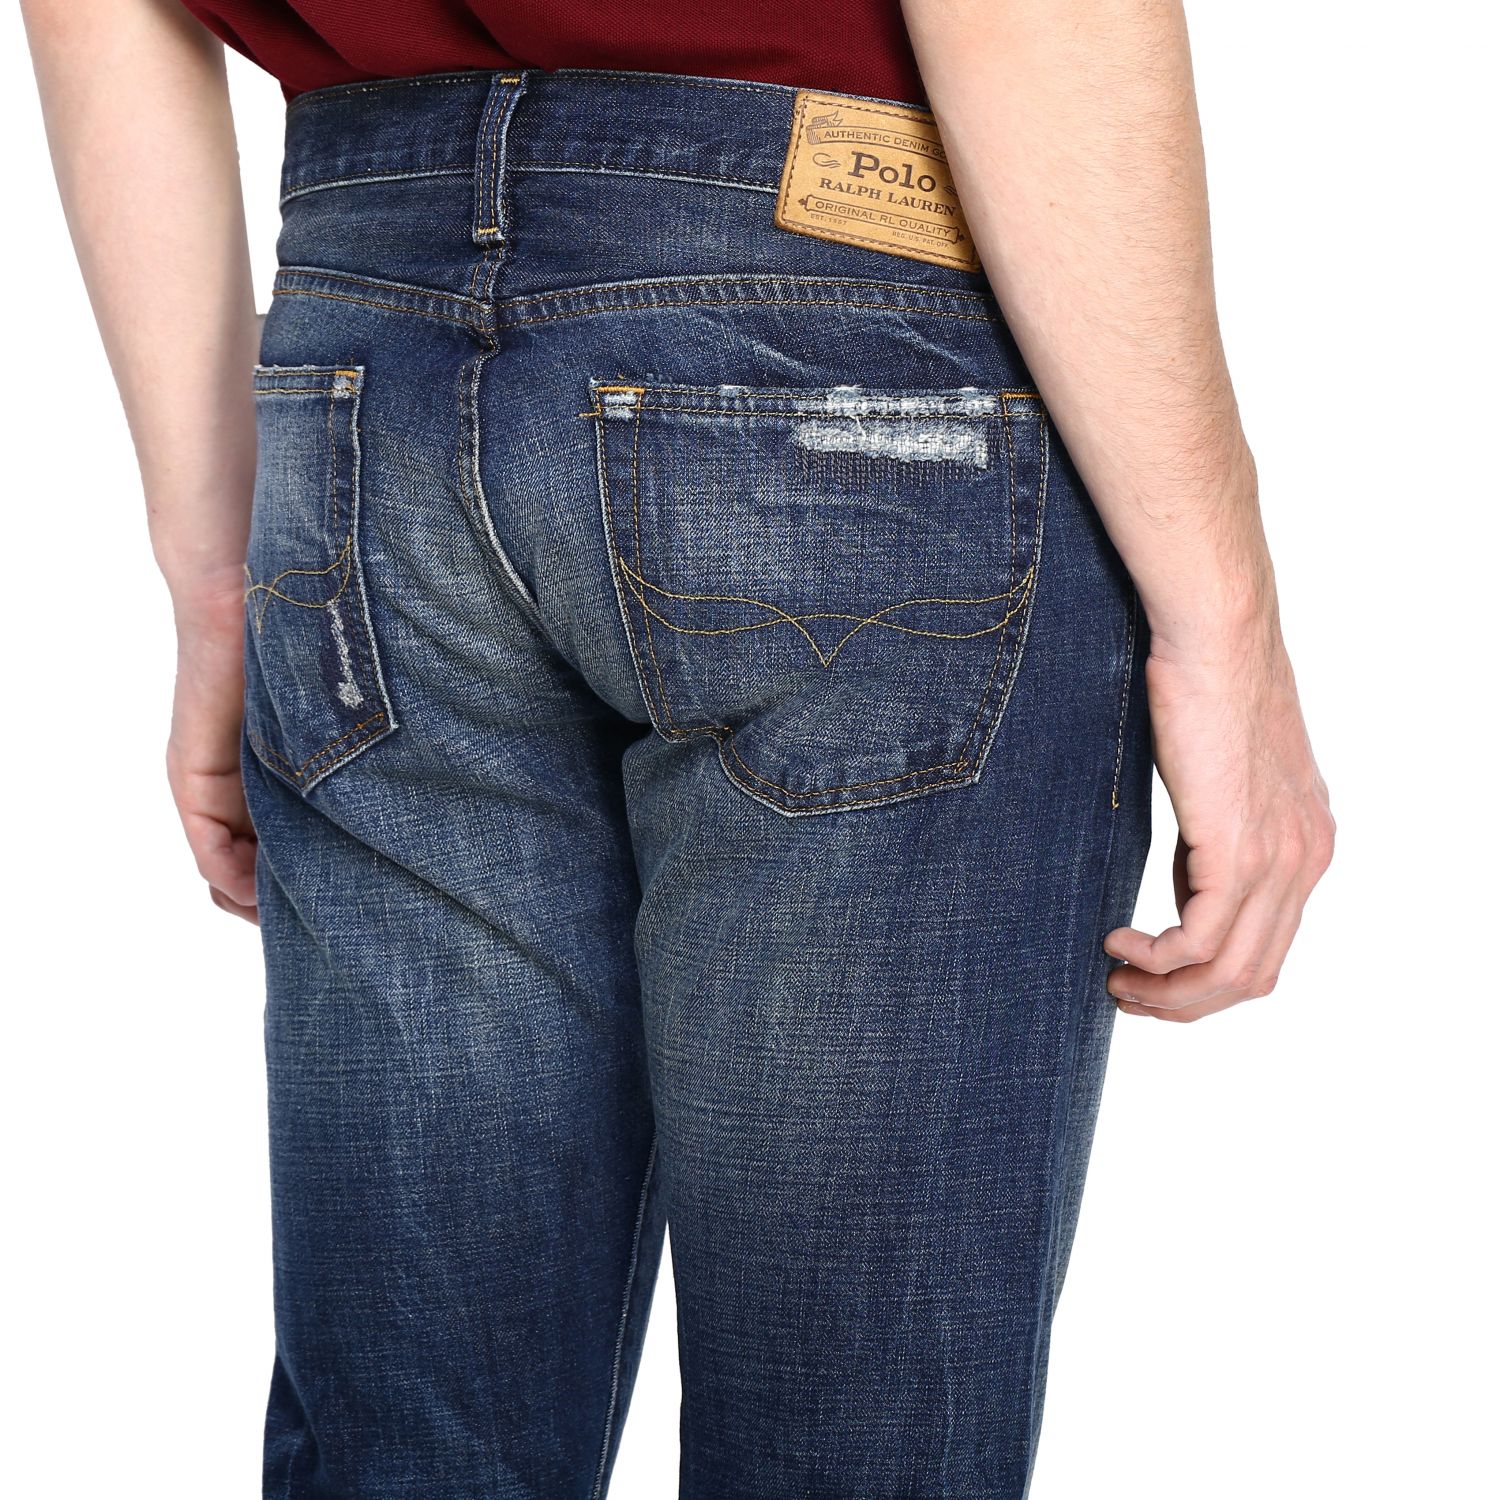 Polo Ralph Lauren Outlet: stretch denim jeans | Jeans Polo Ralph Lauren ...